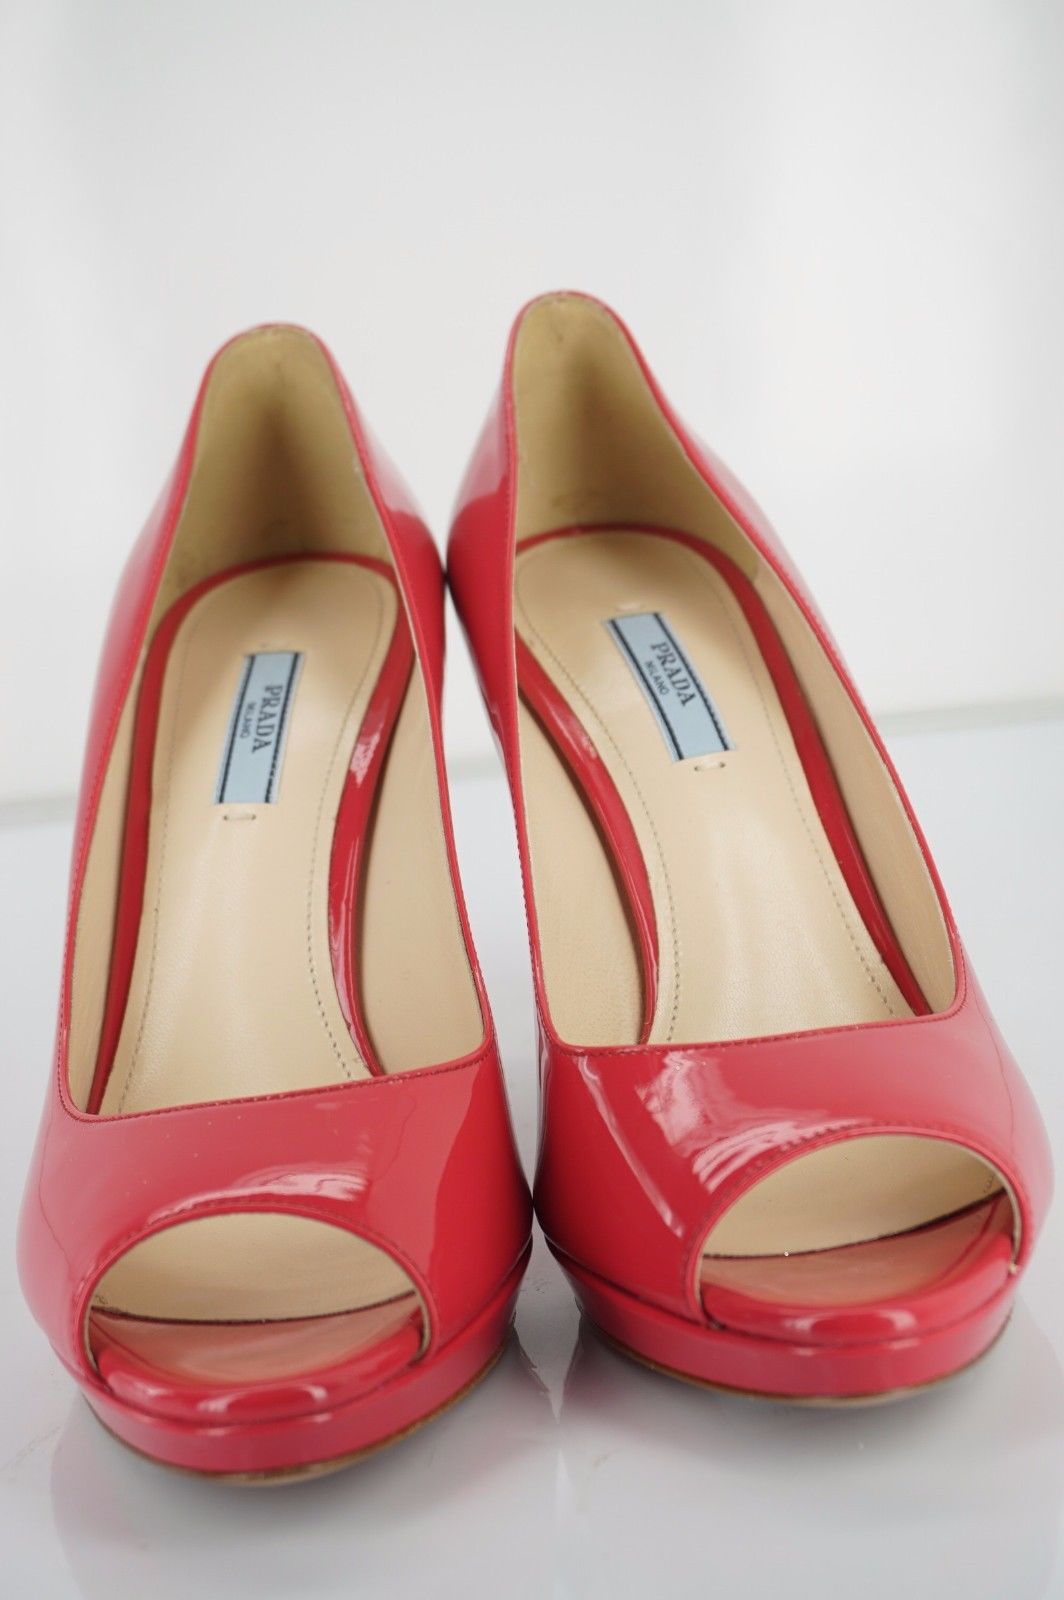 Prada Pink Patent Leather Open Toe Platform High Heel Pumps Size 39 NIB $650